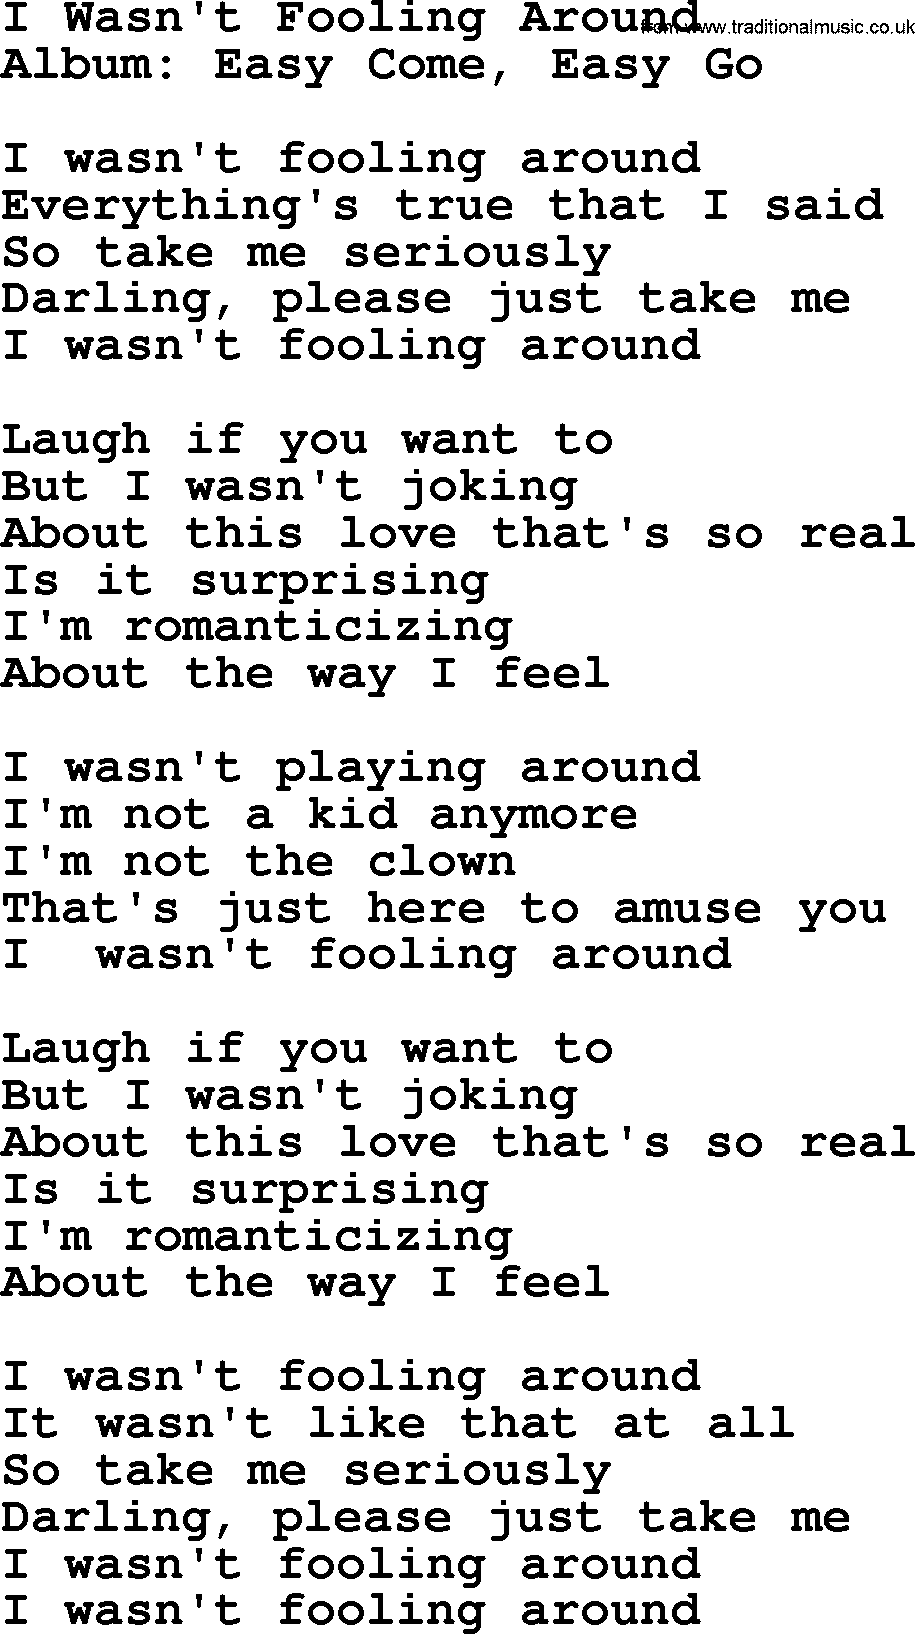 George Strait song: I Wasn't Fooling Around, lyrics